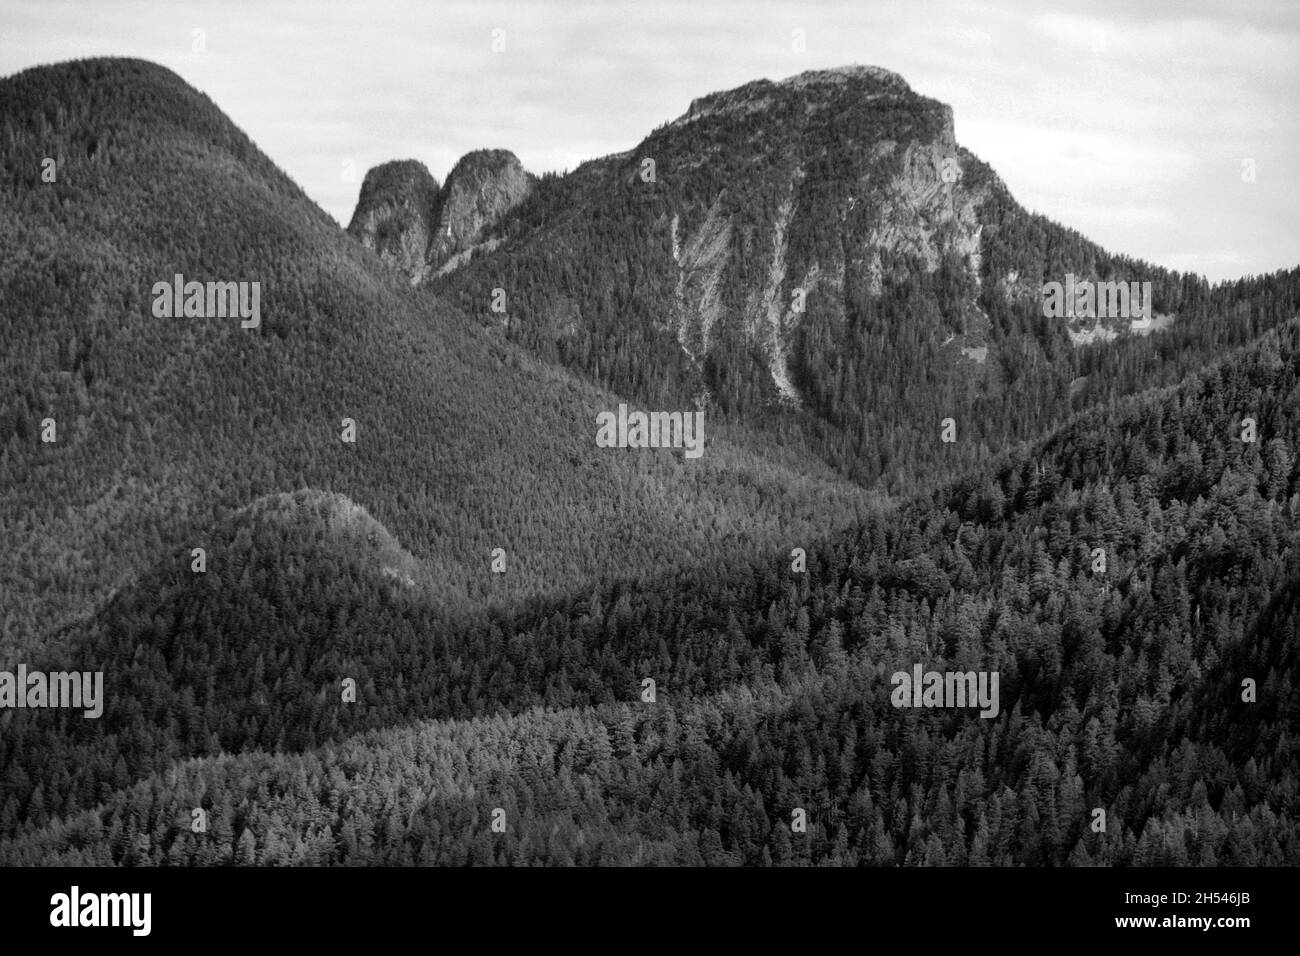 The temperate rainforest and Coast Mountain peaks of Golden Ears Provincial Park, near Maple Ridge, British Columbia, Canada. Stock Photo